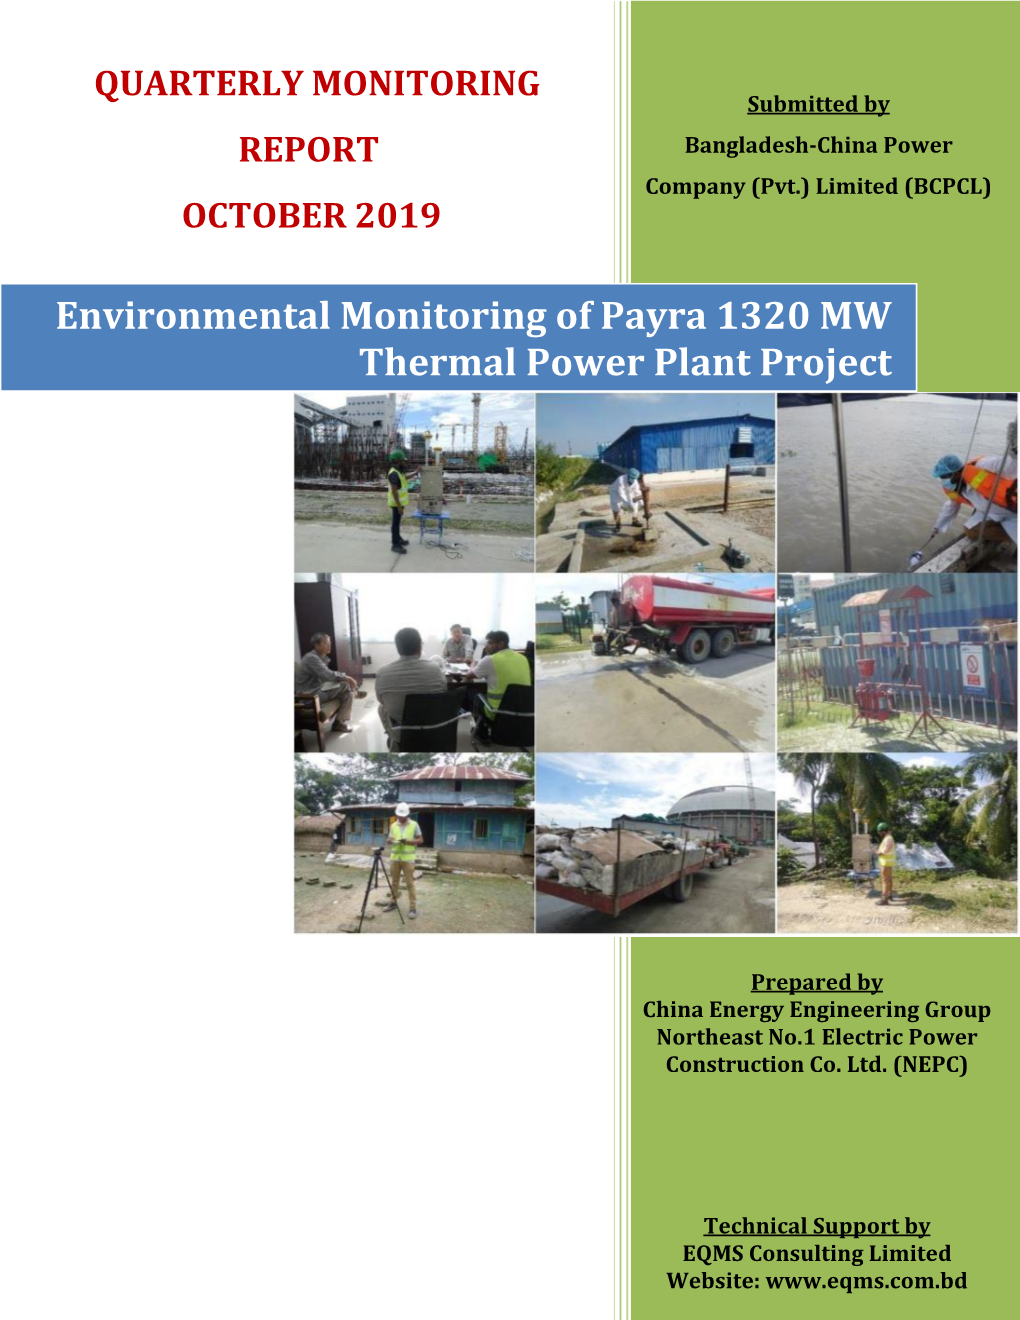 Environmental Monitoring of Payra 1320 MW Thermal Power Plant Project